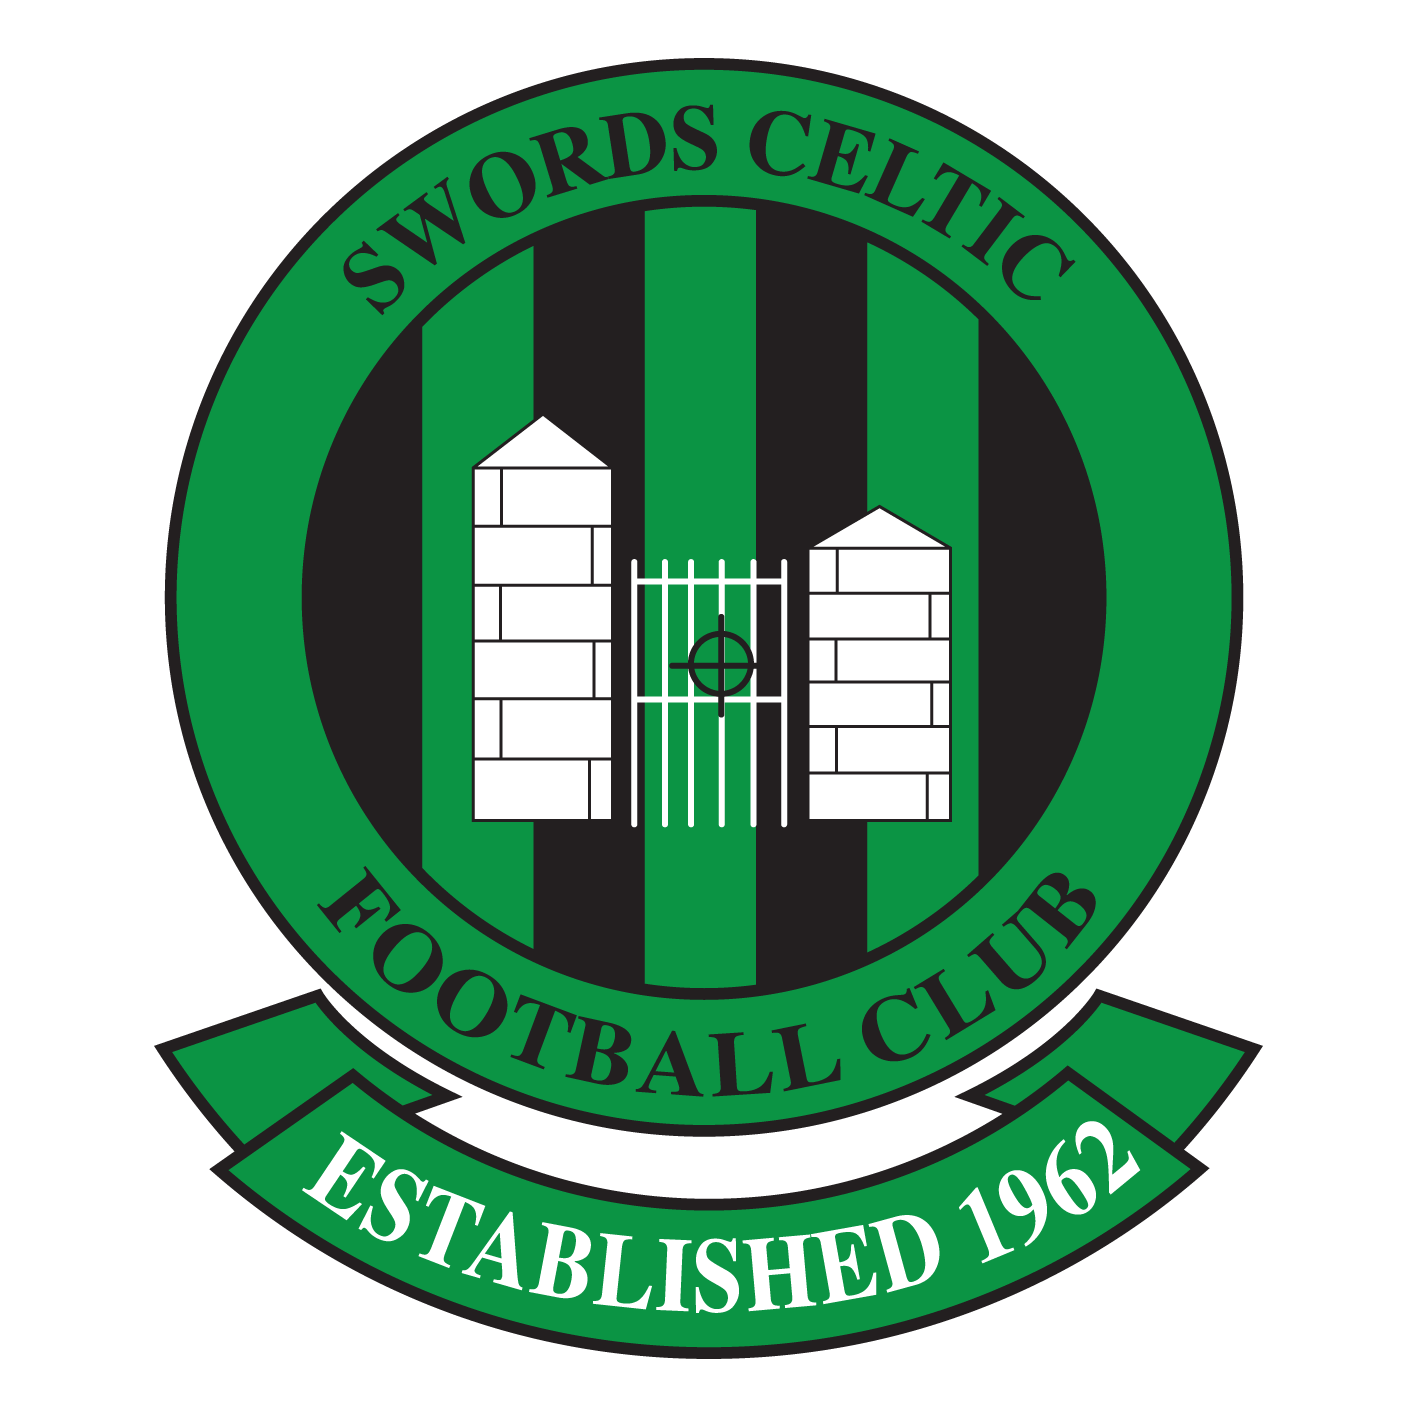 Swords Celtic Football Club